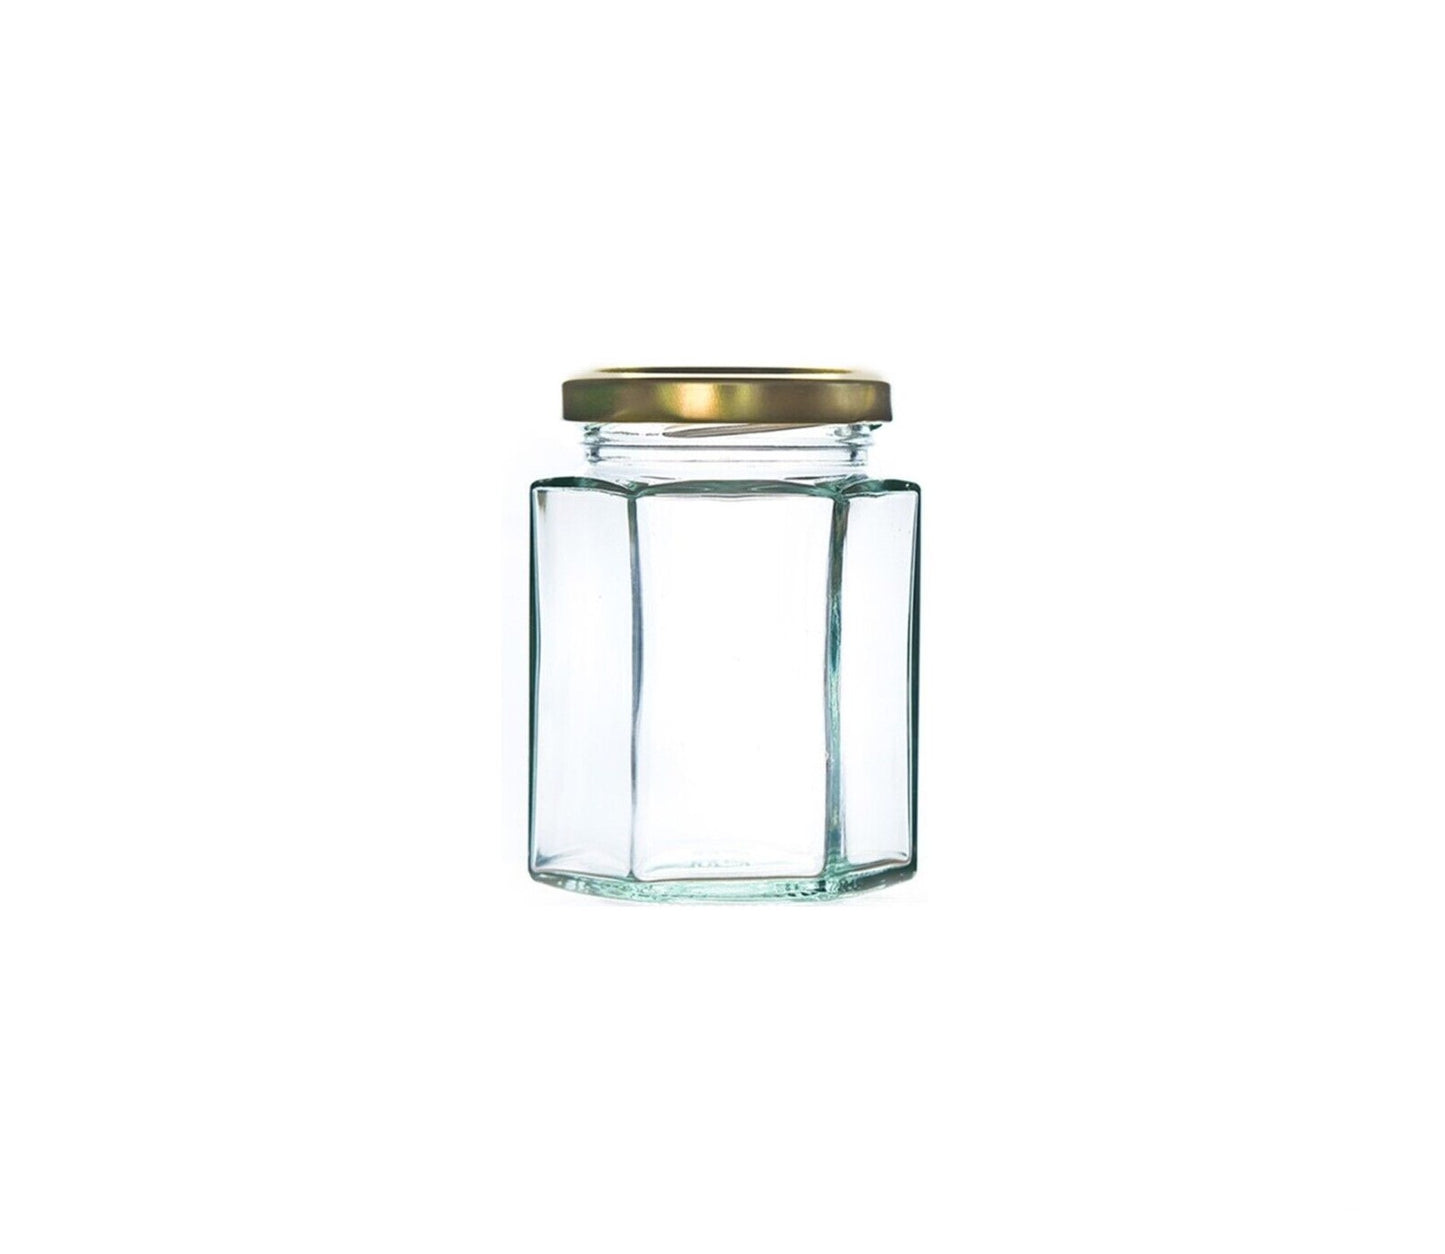 Hexagonal Glass Jam Jars 280ml (340g) Honey Jars with Gold Lid - 24 Pack